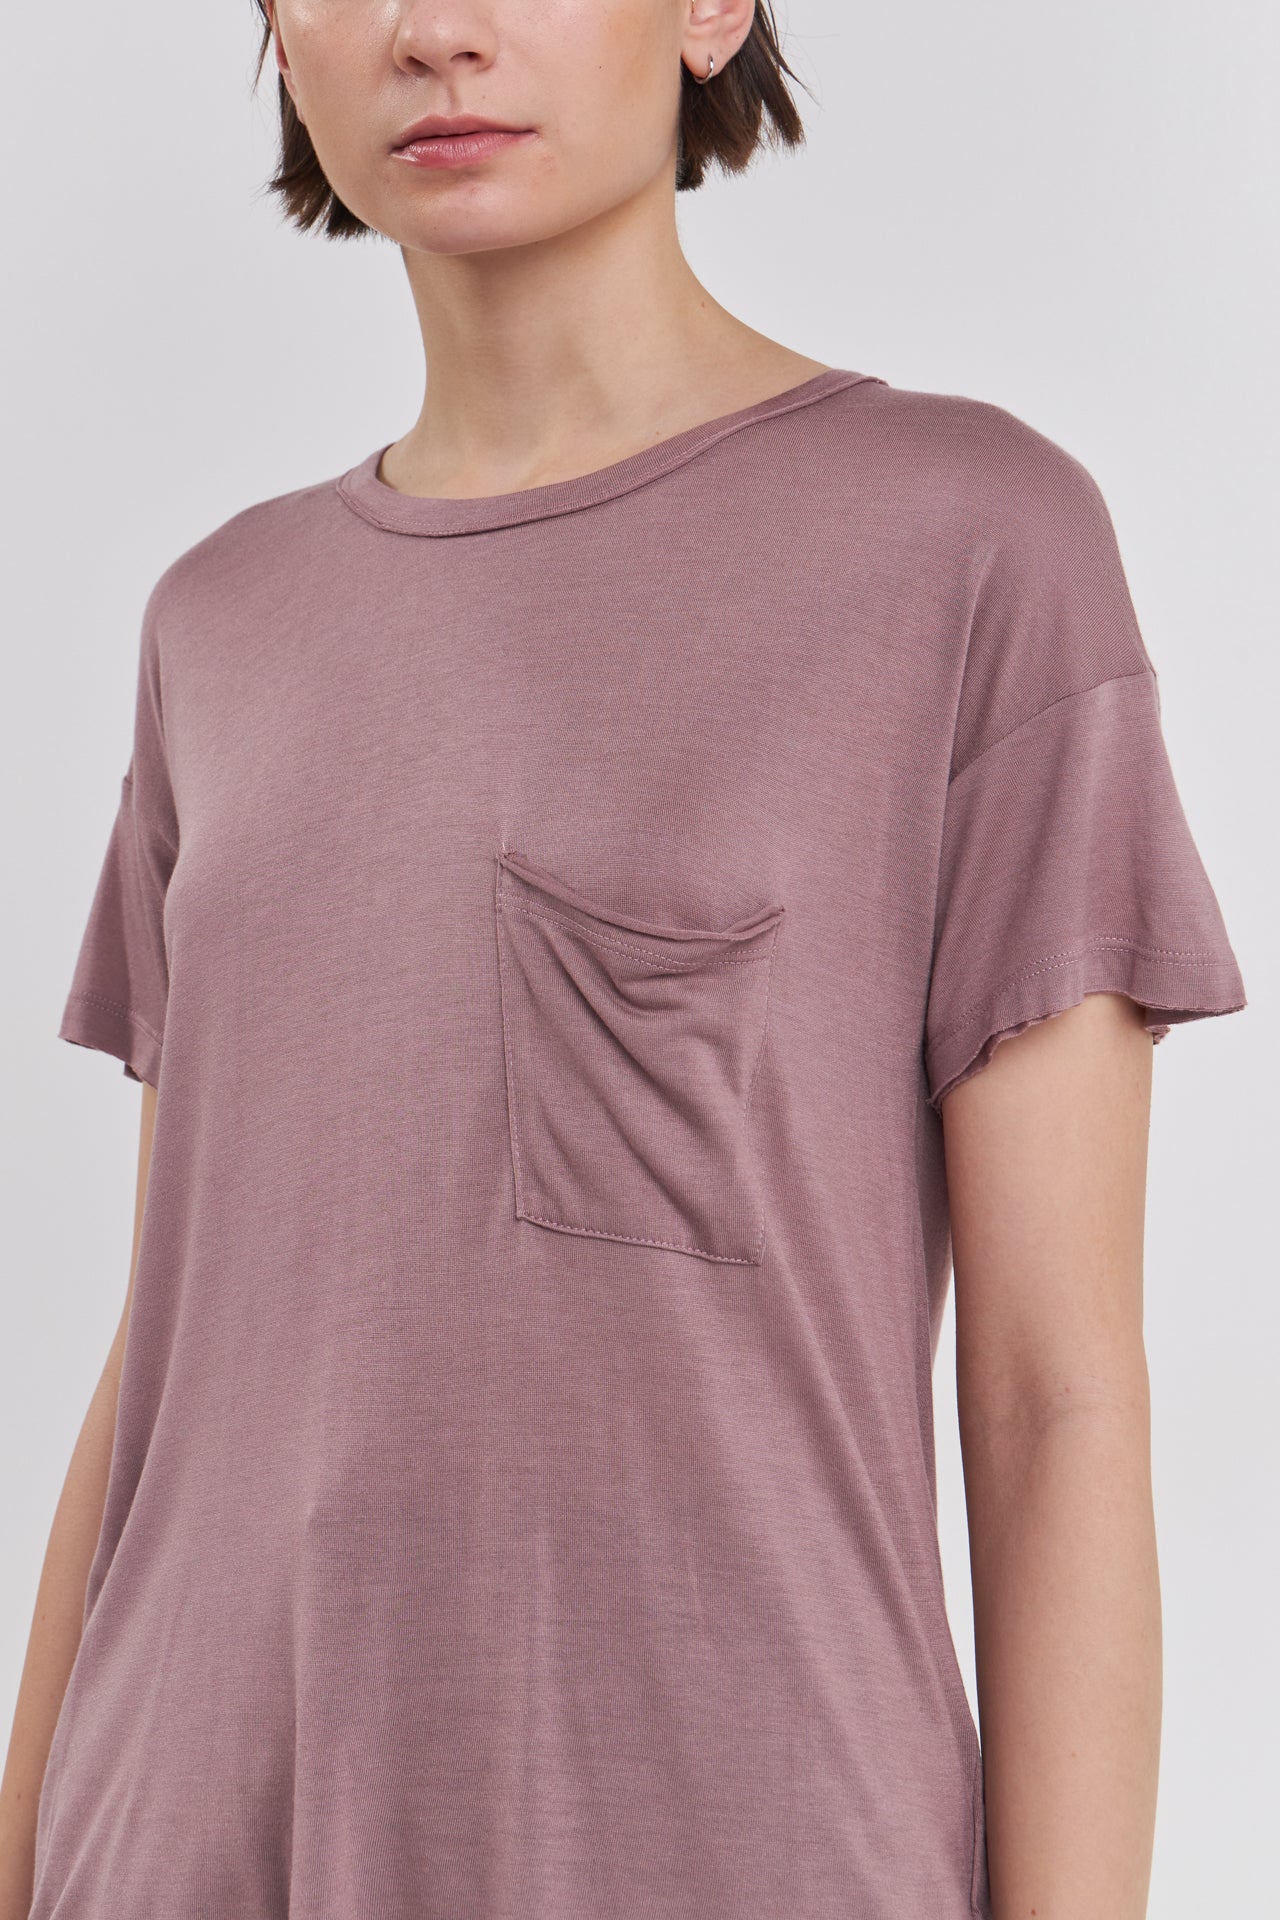 GREY LAB - Modal Pocket T-Shirt - T-SHIRTS available at Objectrare